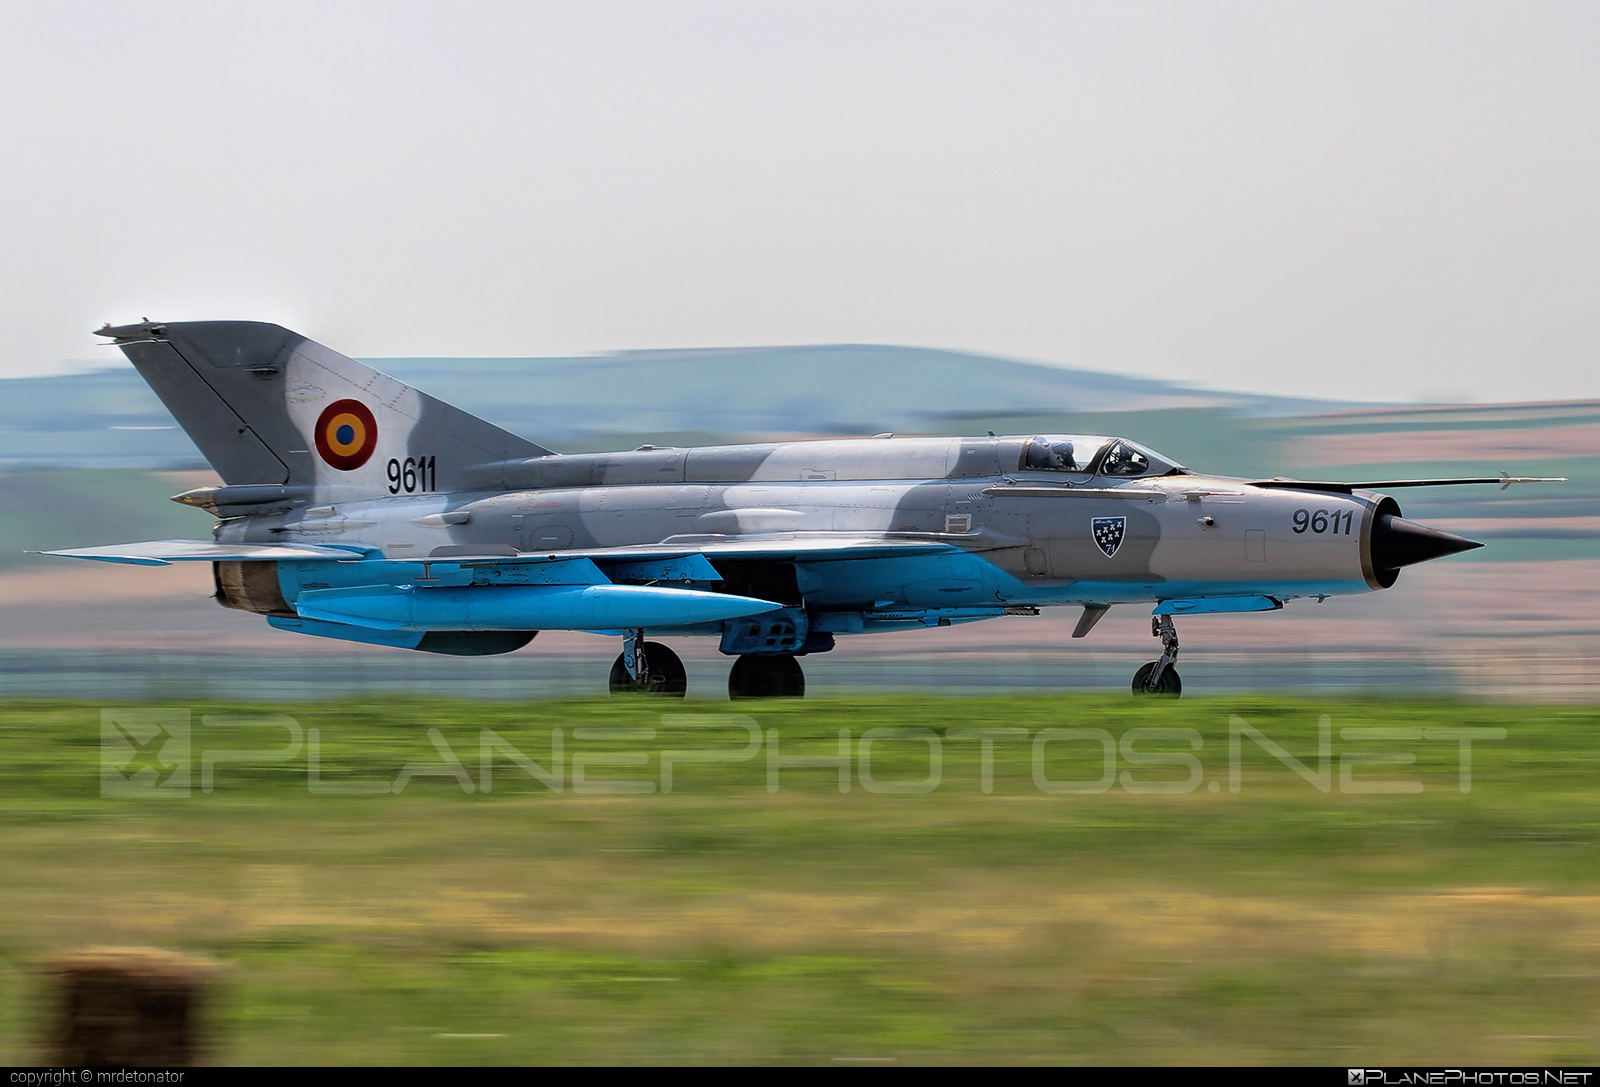 Mikoyan-Gurevich MiG-21MF - 9611 operated by Forţele Aeriene Române (Romanian Air Force) #forteleaerieneromane #mig #mig21 #mig21mf #mikoyangurevich #romanianairforce